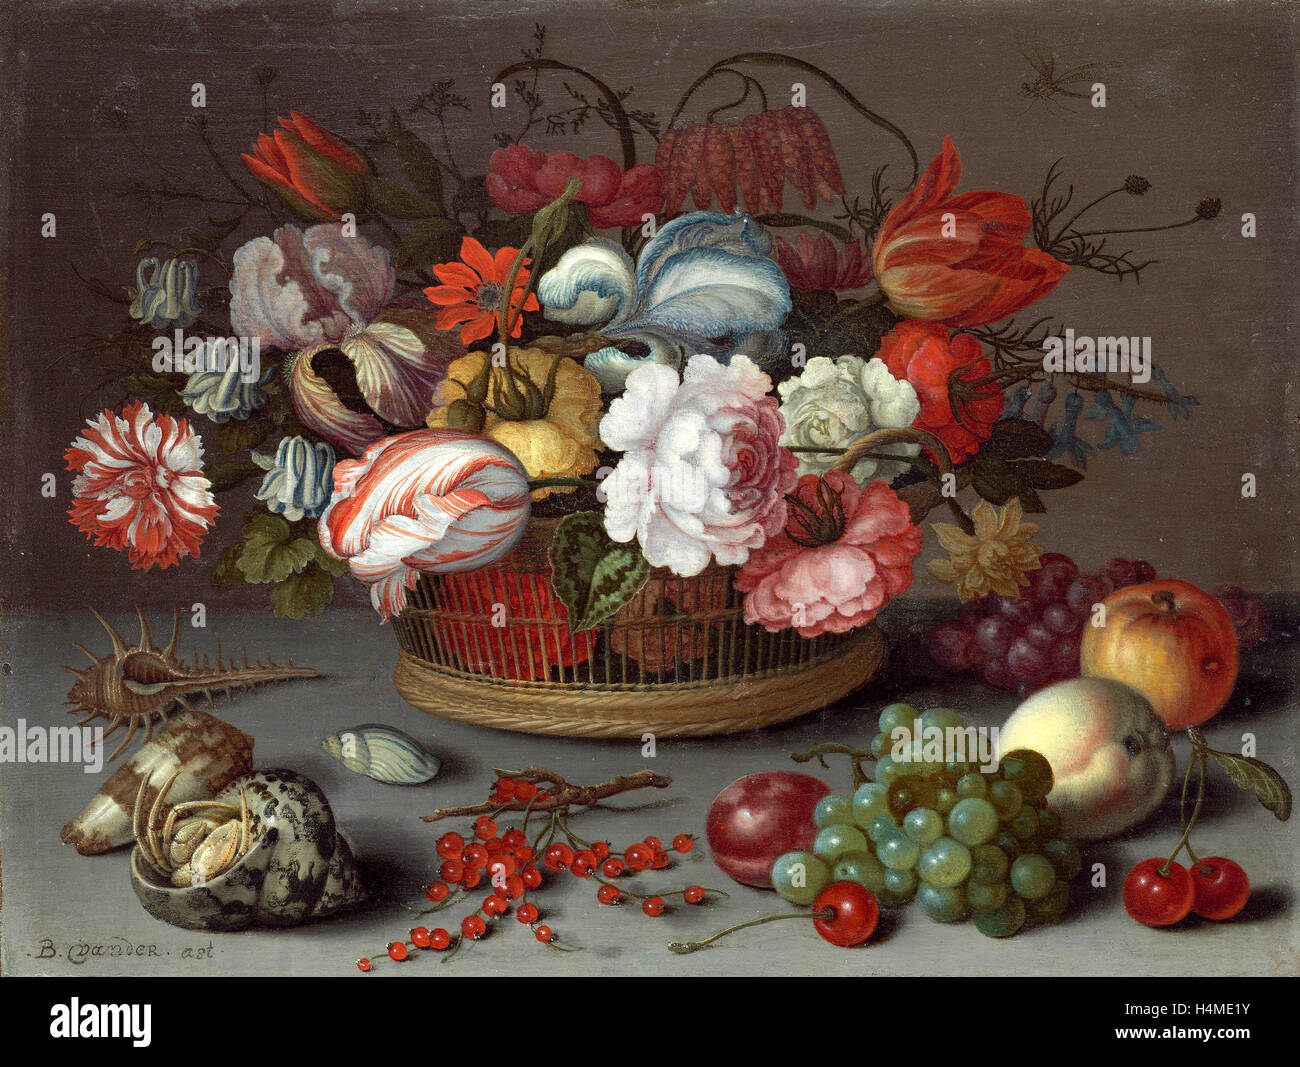 Balthasar van der Ast (Dutch, 1593-1594 - 1657), Basket of Flowers, c. 1622, oil on panel Stock Photo